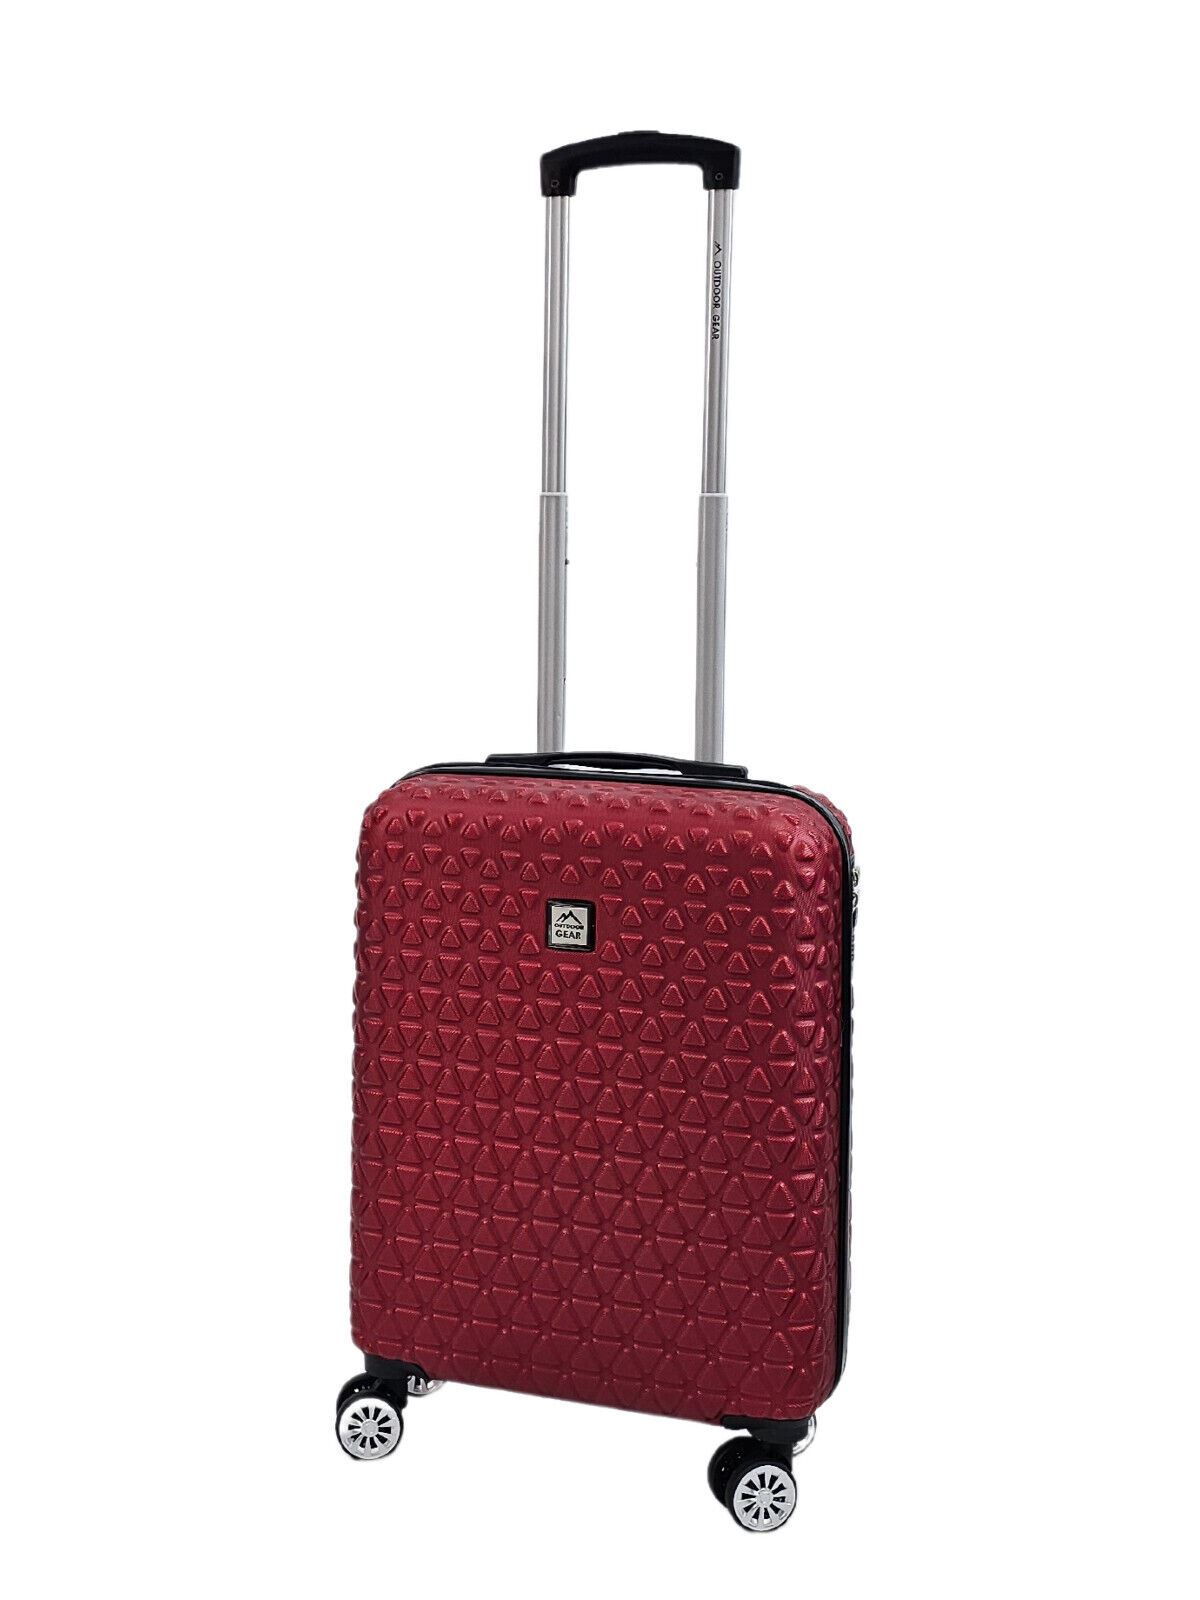 Hardshell Suitcase Robust 8 Wheel Lightweight Luggage Cabin Case Bag